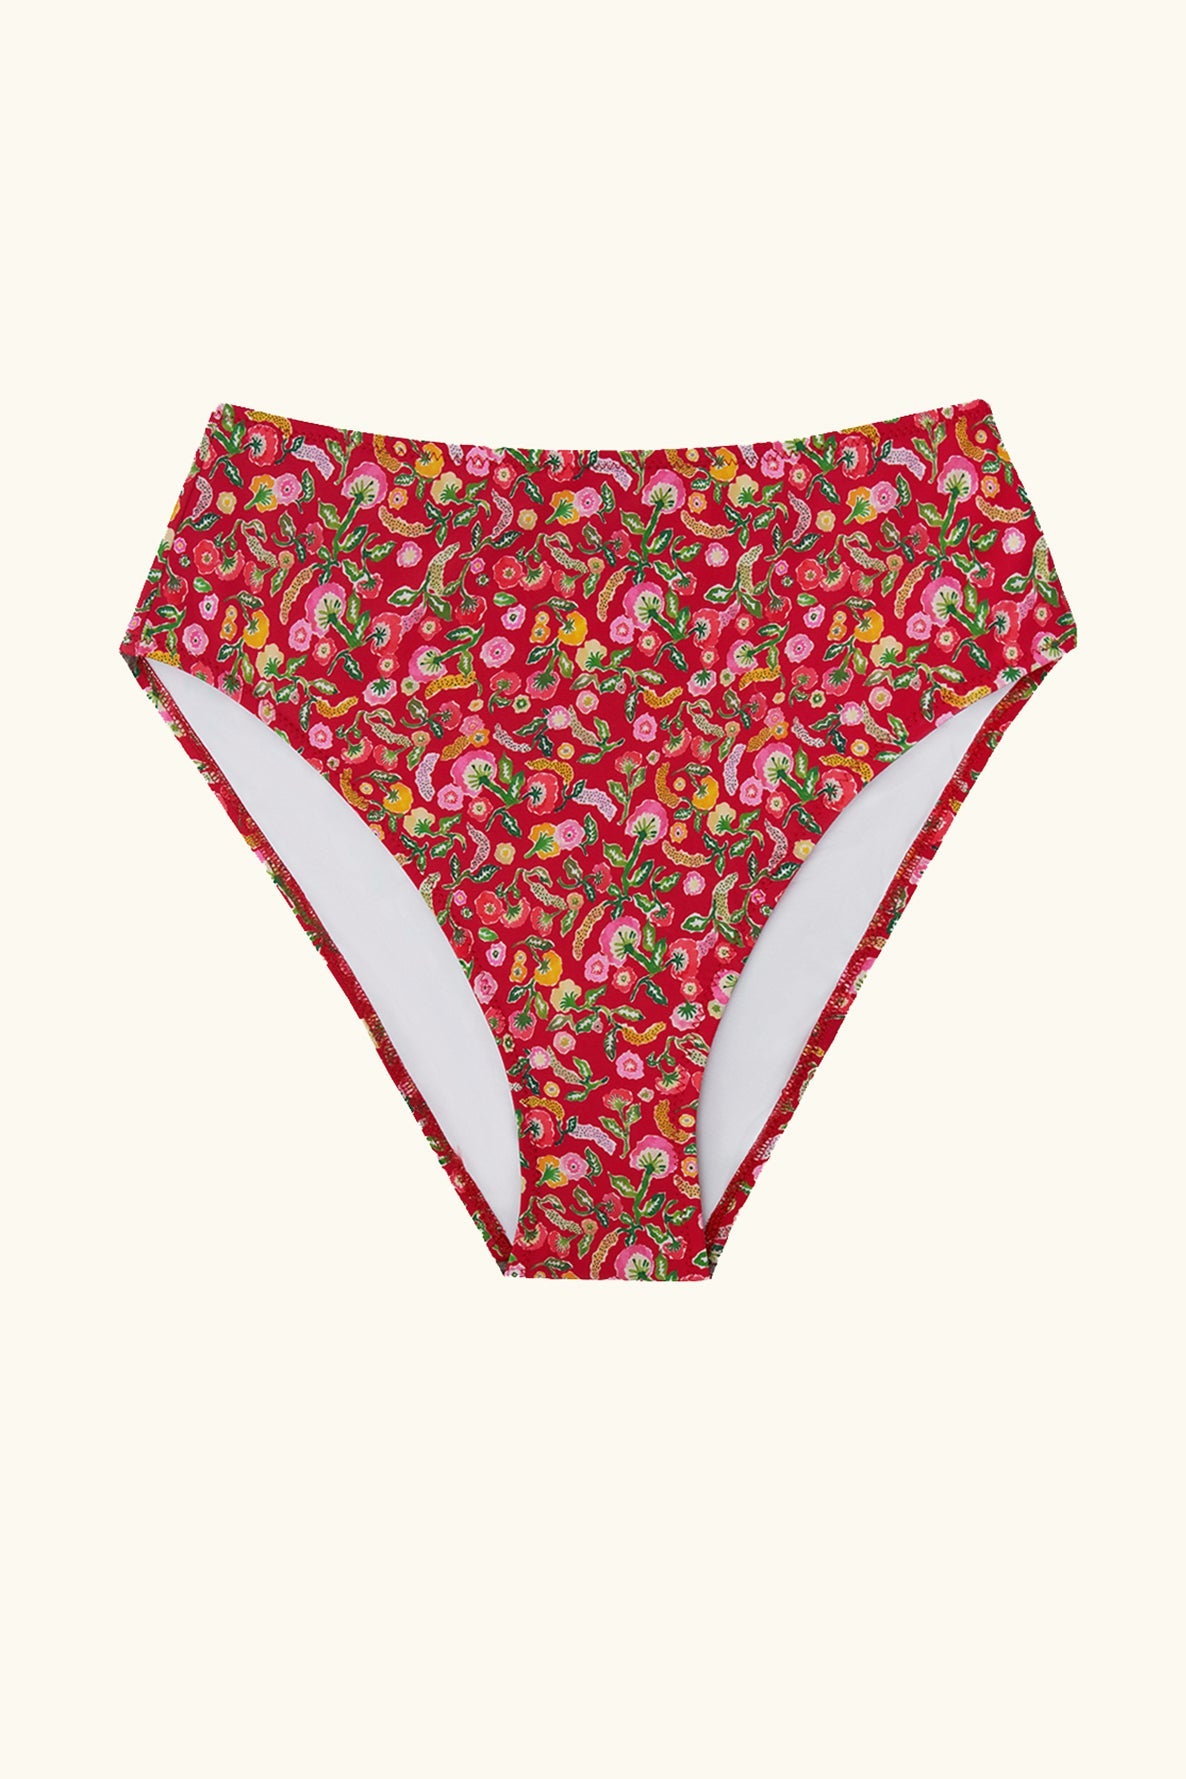 sustainable fashion brand high waisted bikini bottom red floral print